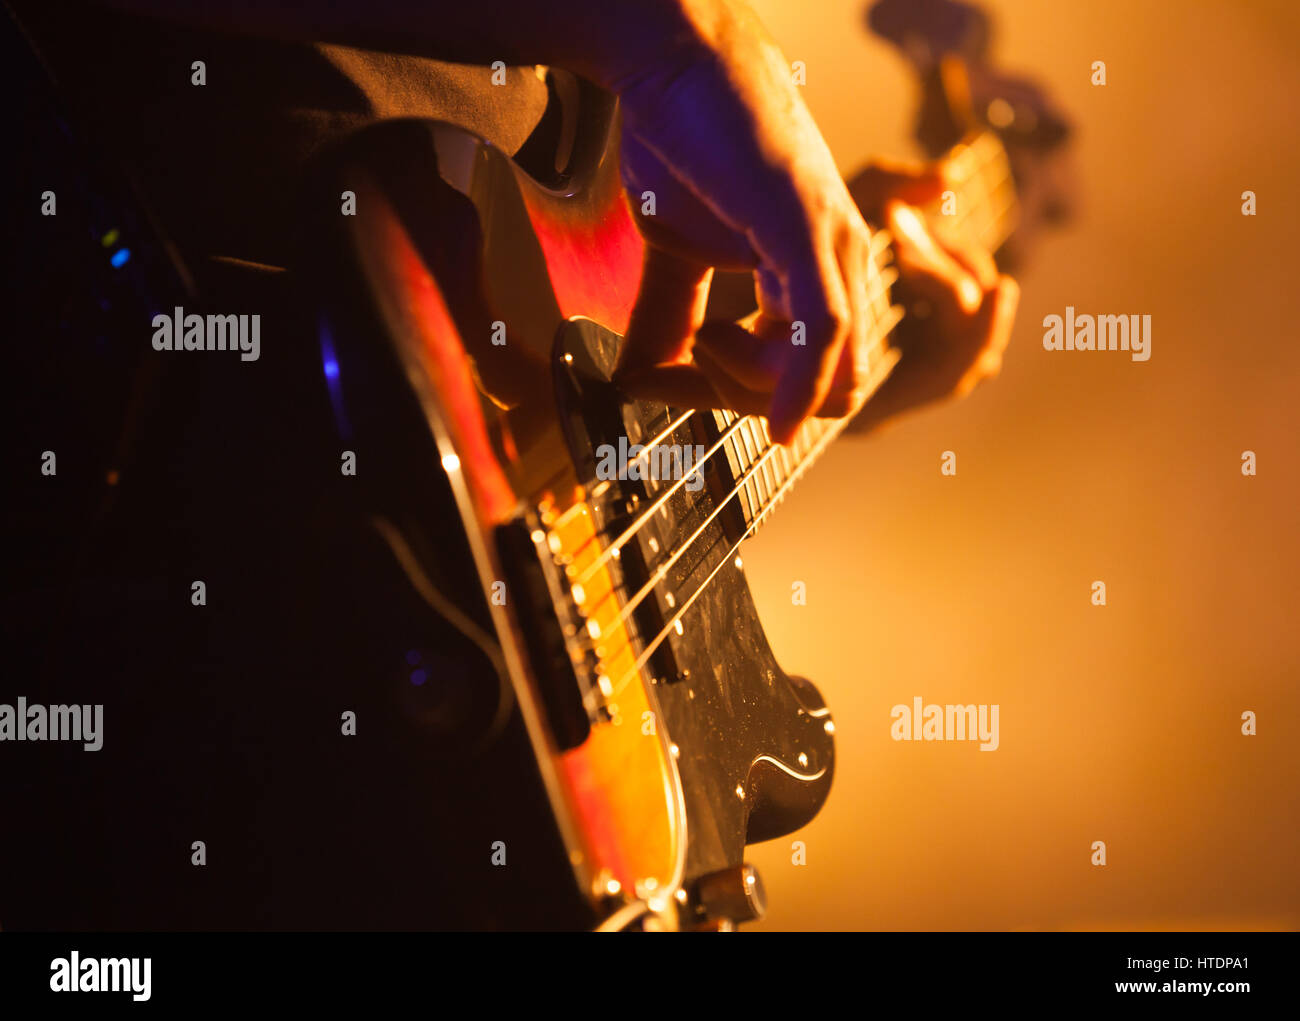 Close-up photo of bass guitar player, soft selective focus, live rock music theme Stock Photo